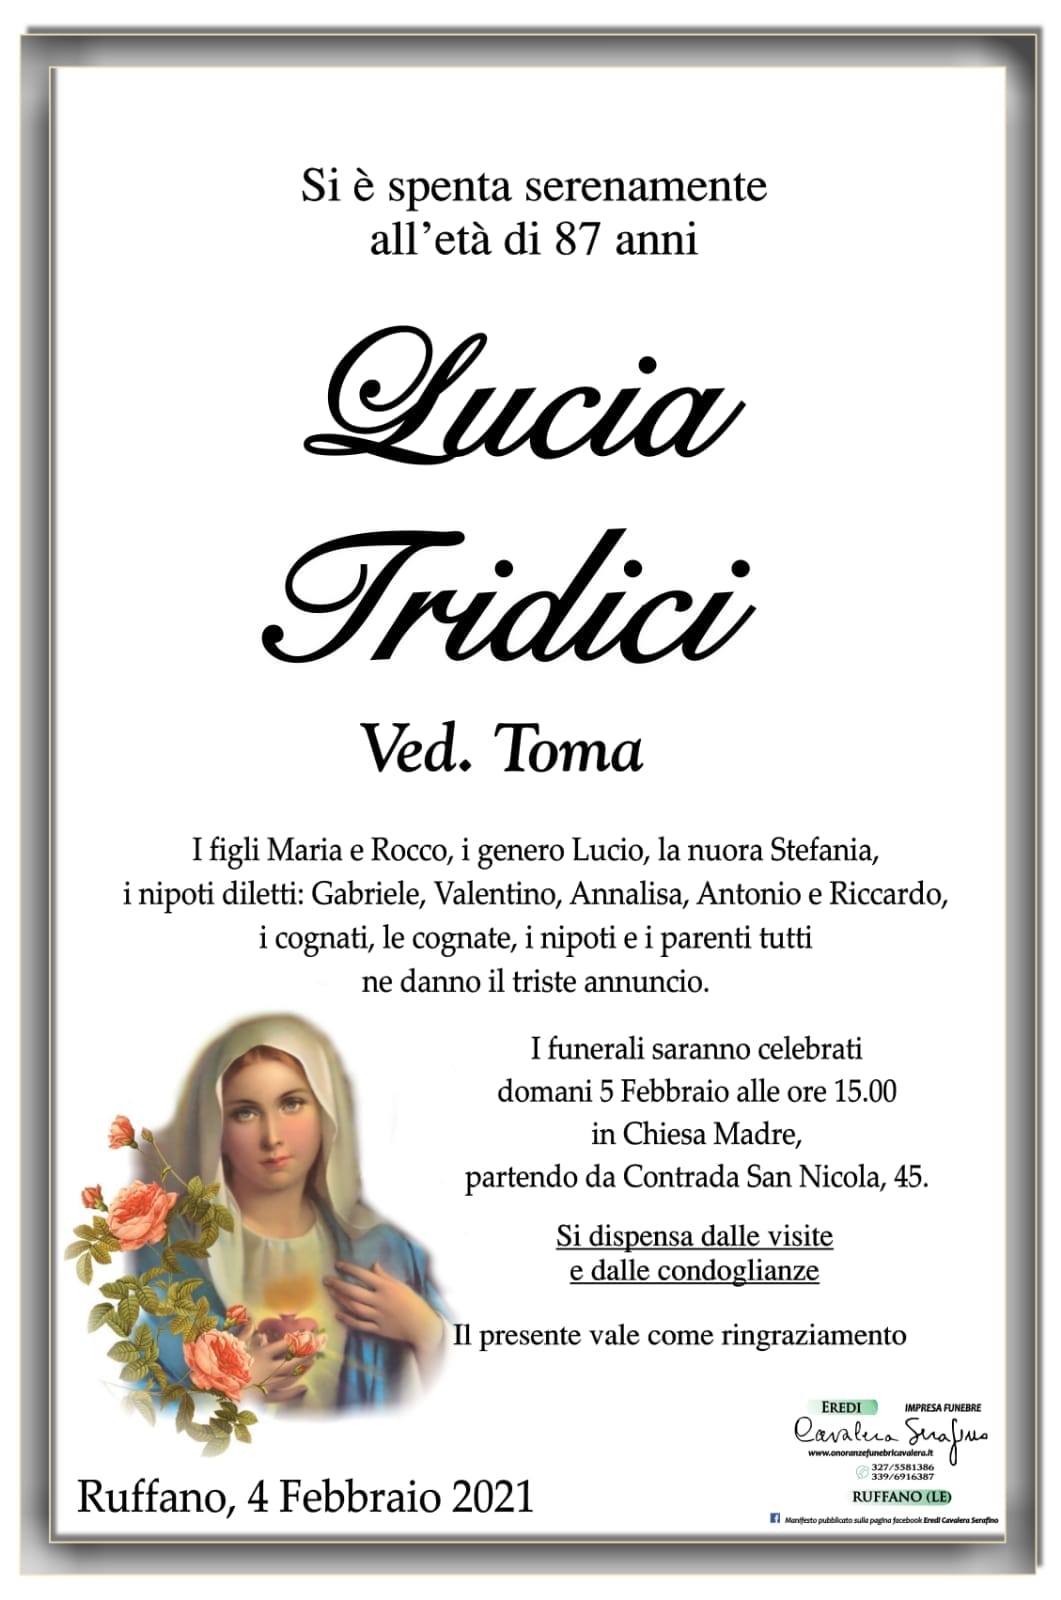 Lucia Tridici